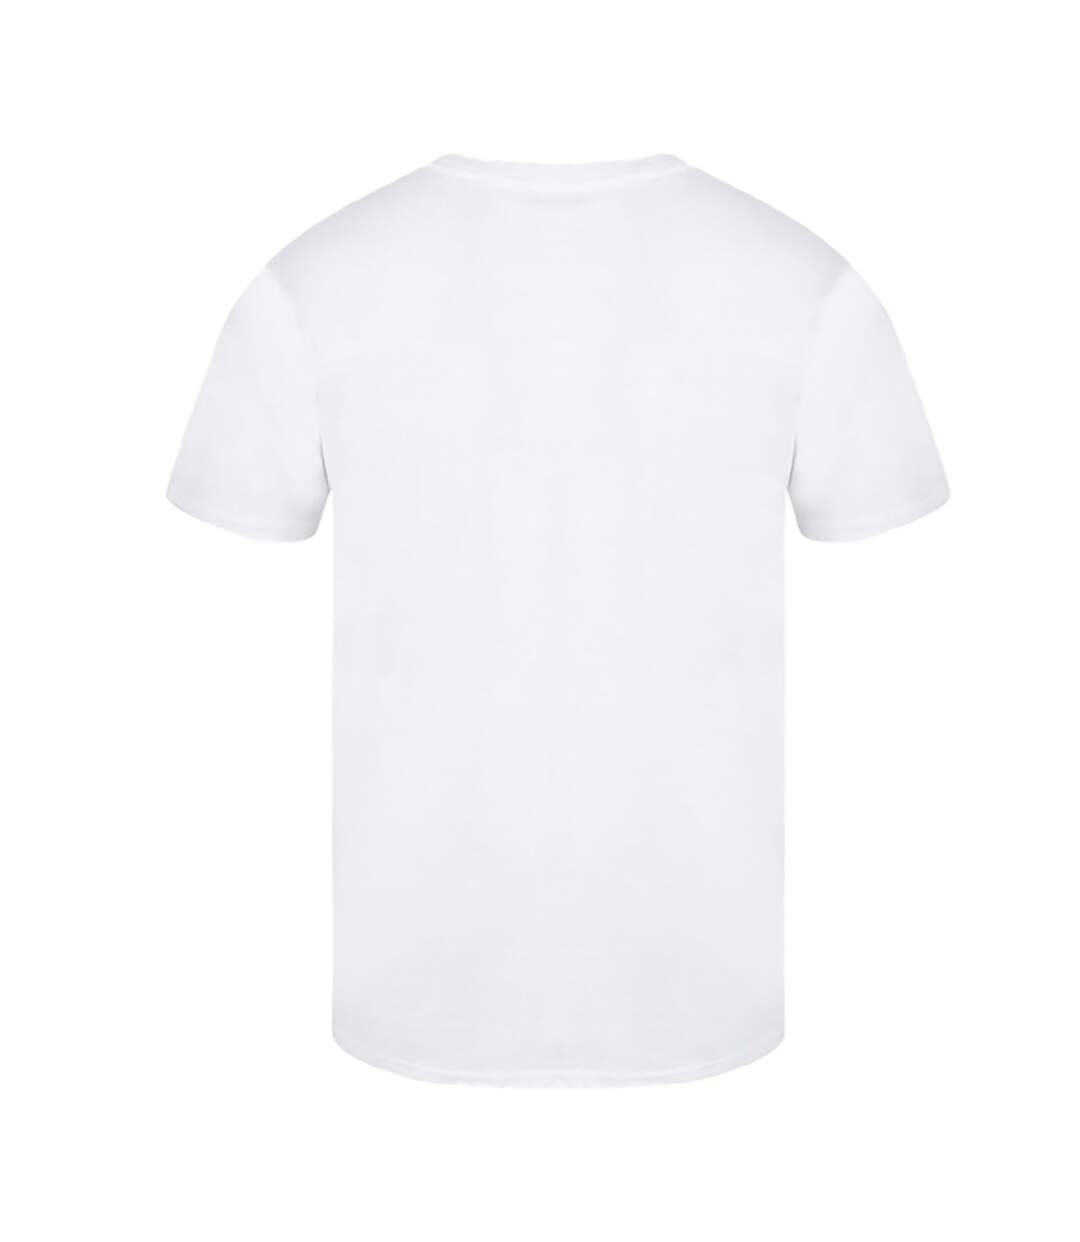 Casual - T-shirt manches courtes - Homme (Blanc) - UTAB260